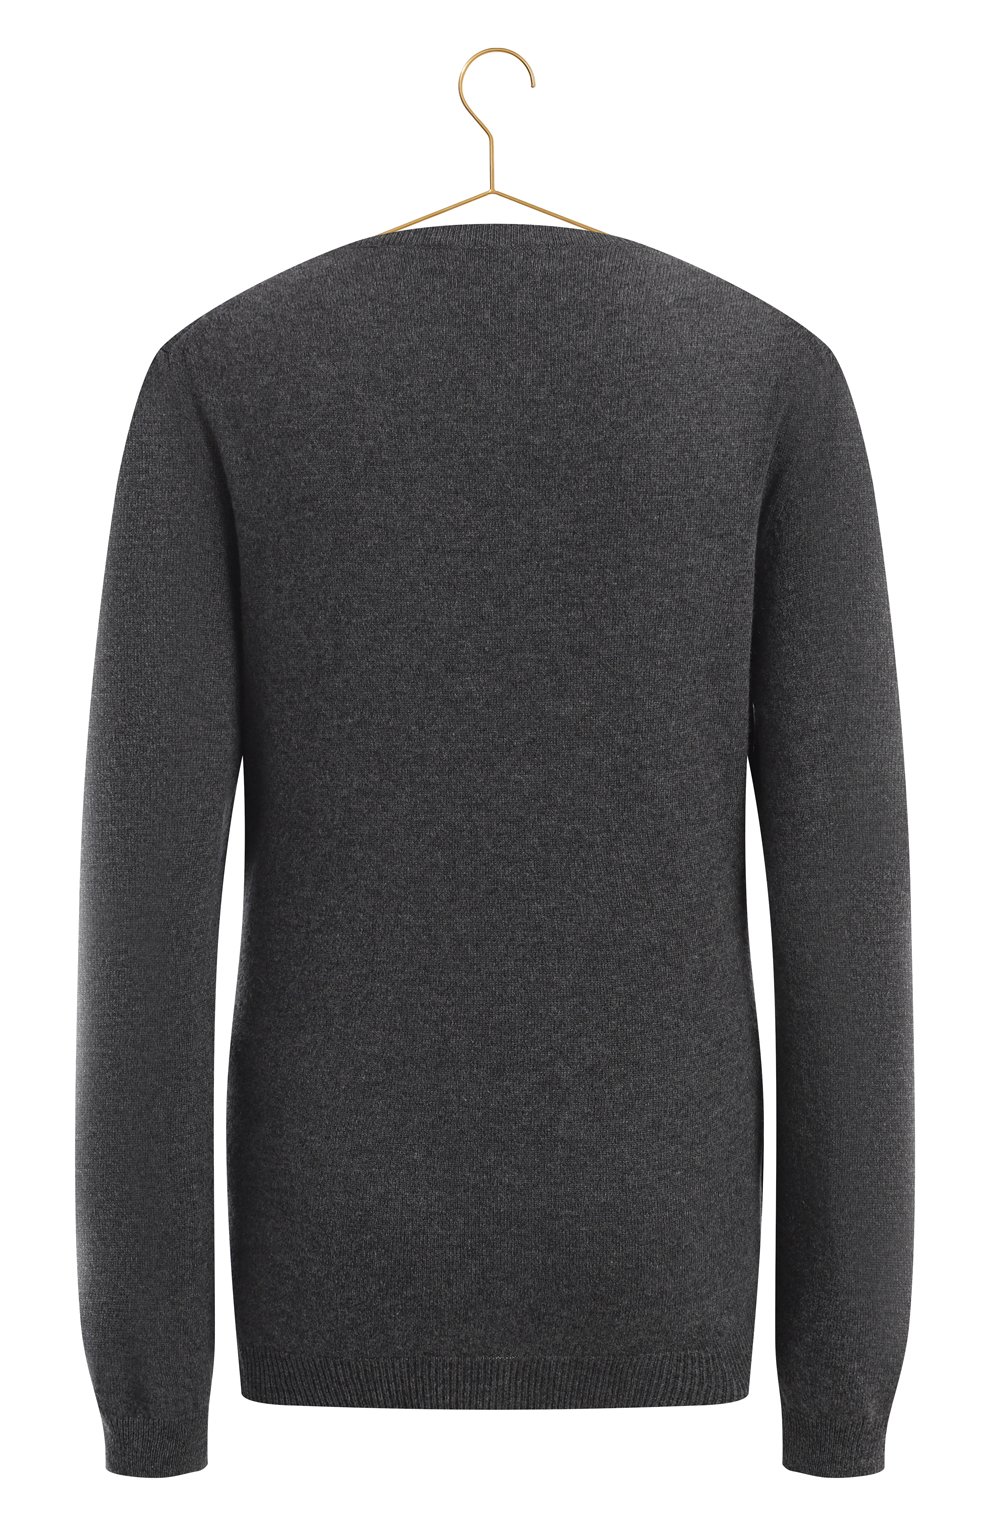 Кашемировый пуловер | Valentino | Серый - 2